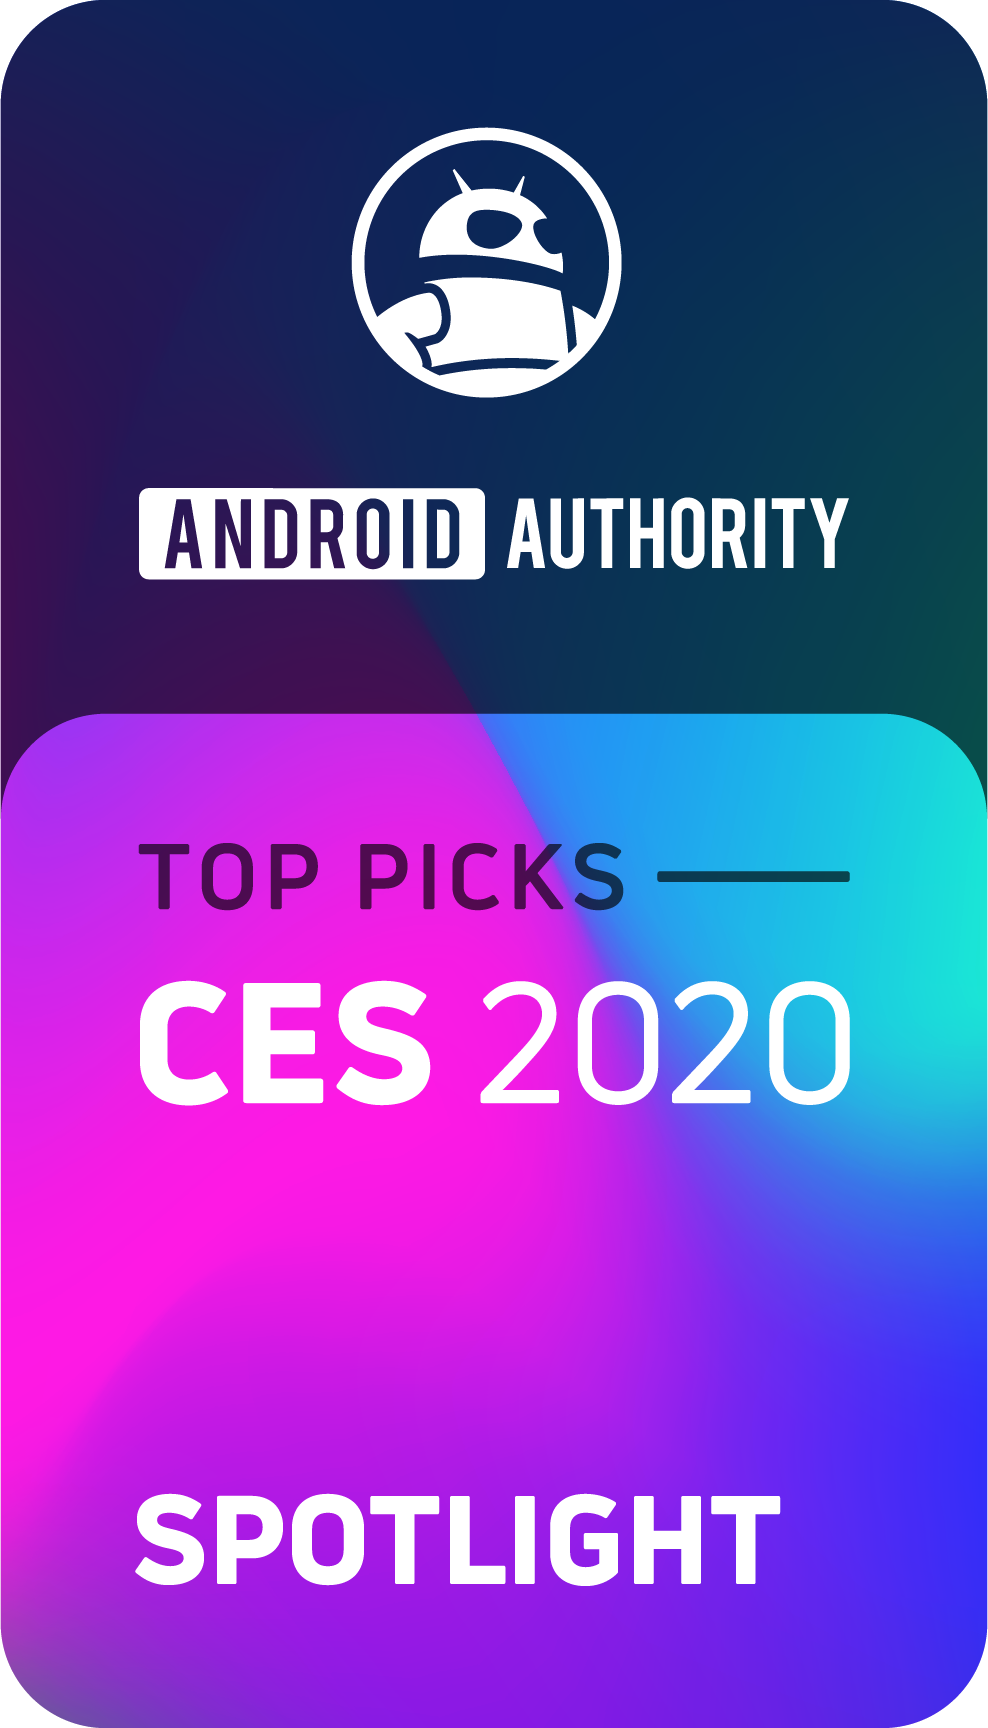 Android Authority CES 2020 Spotlight award badge